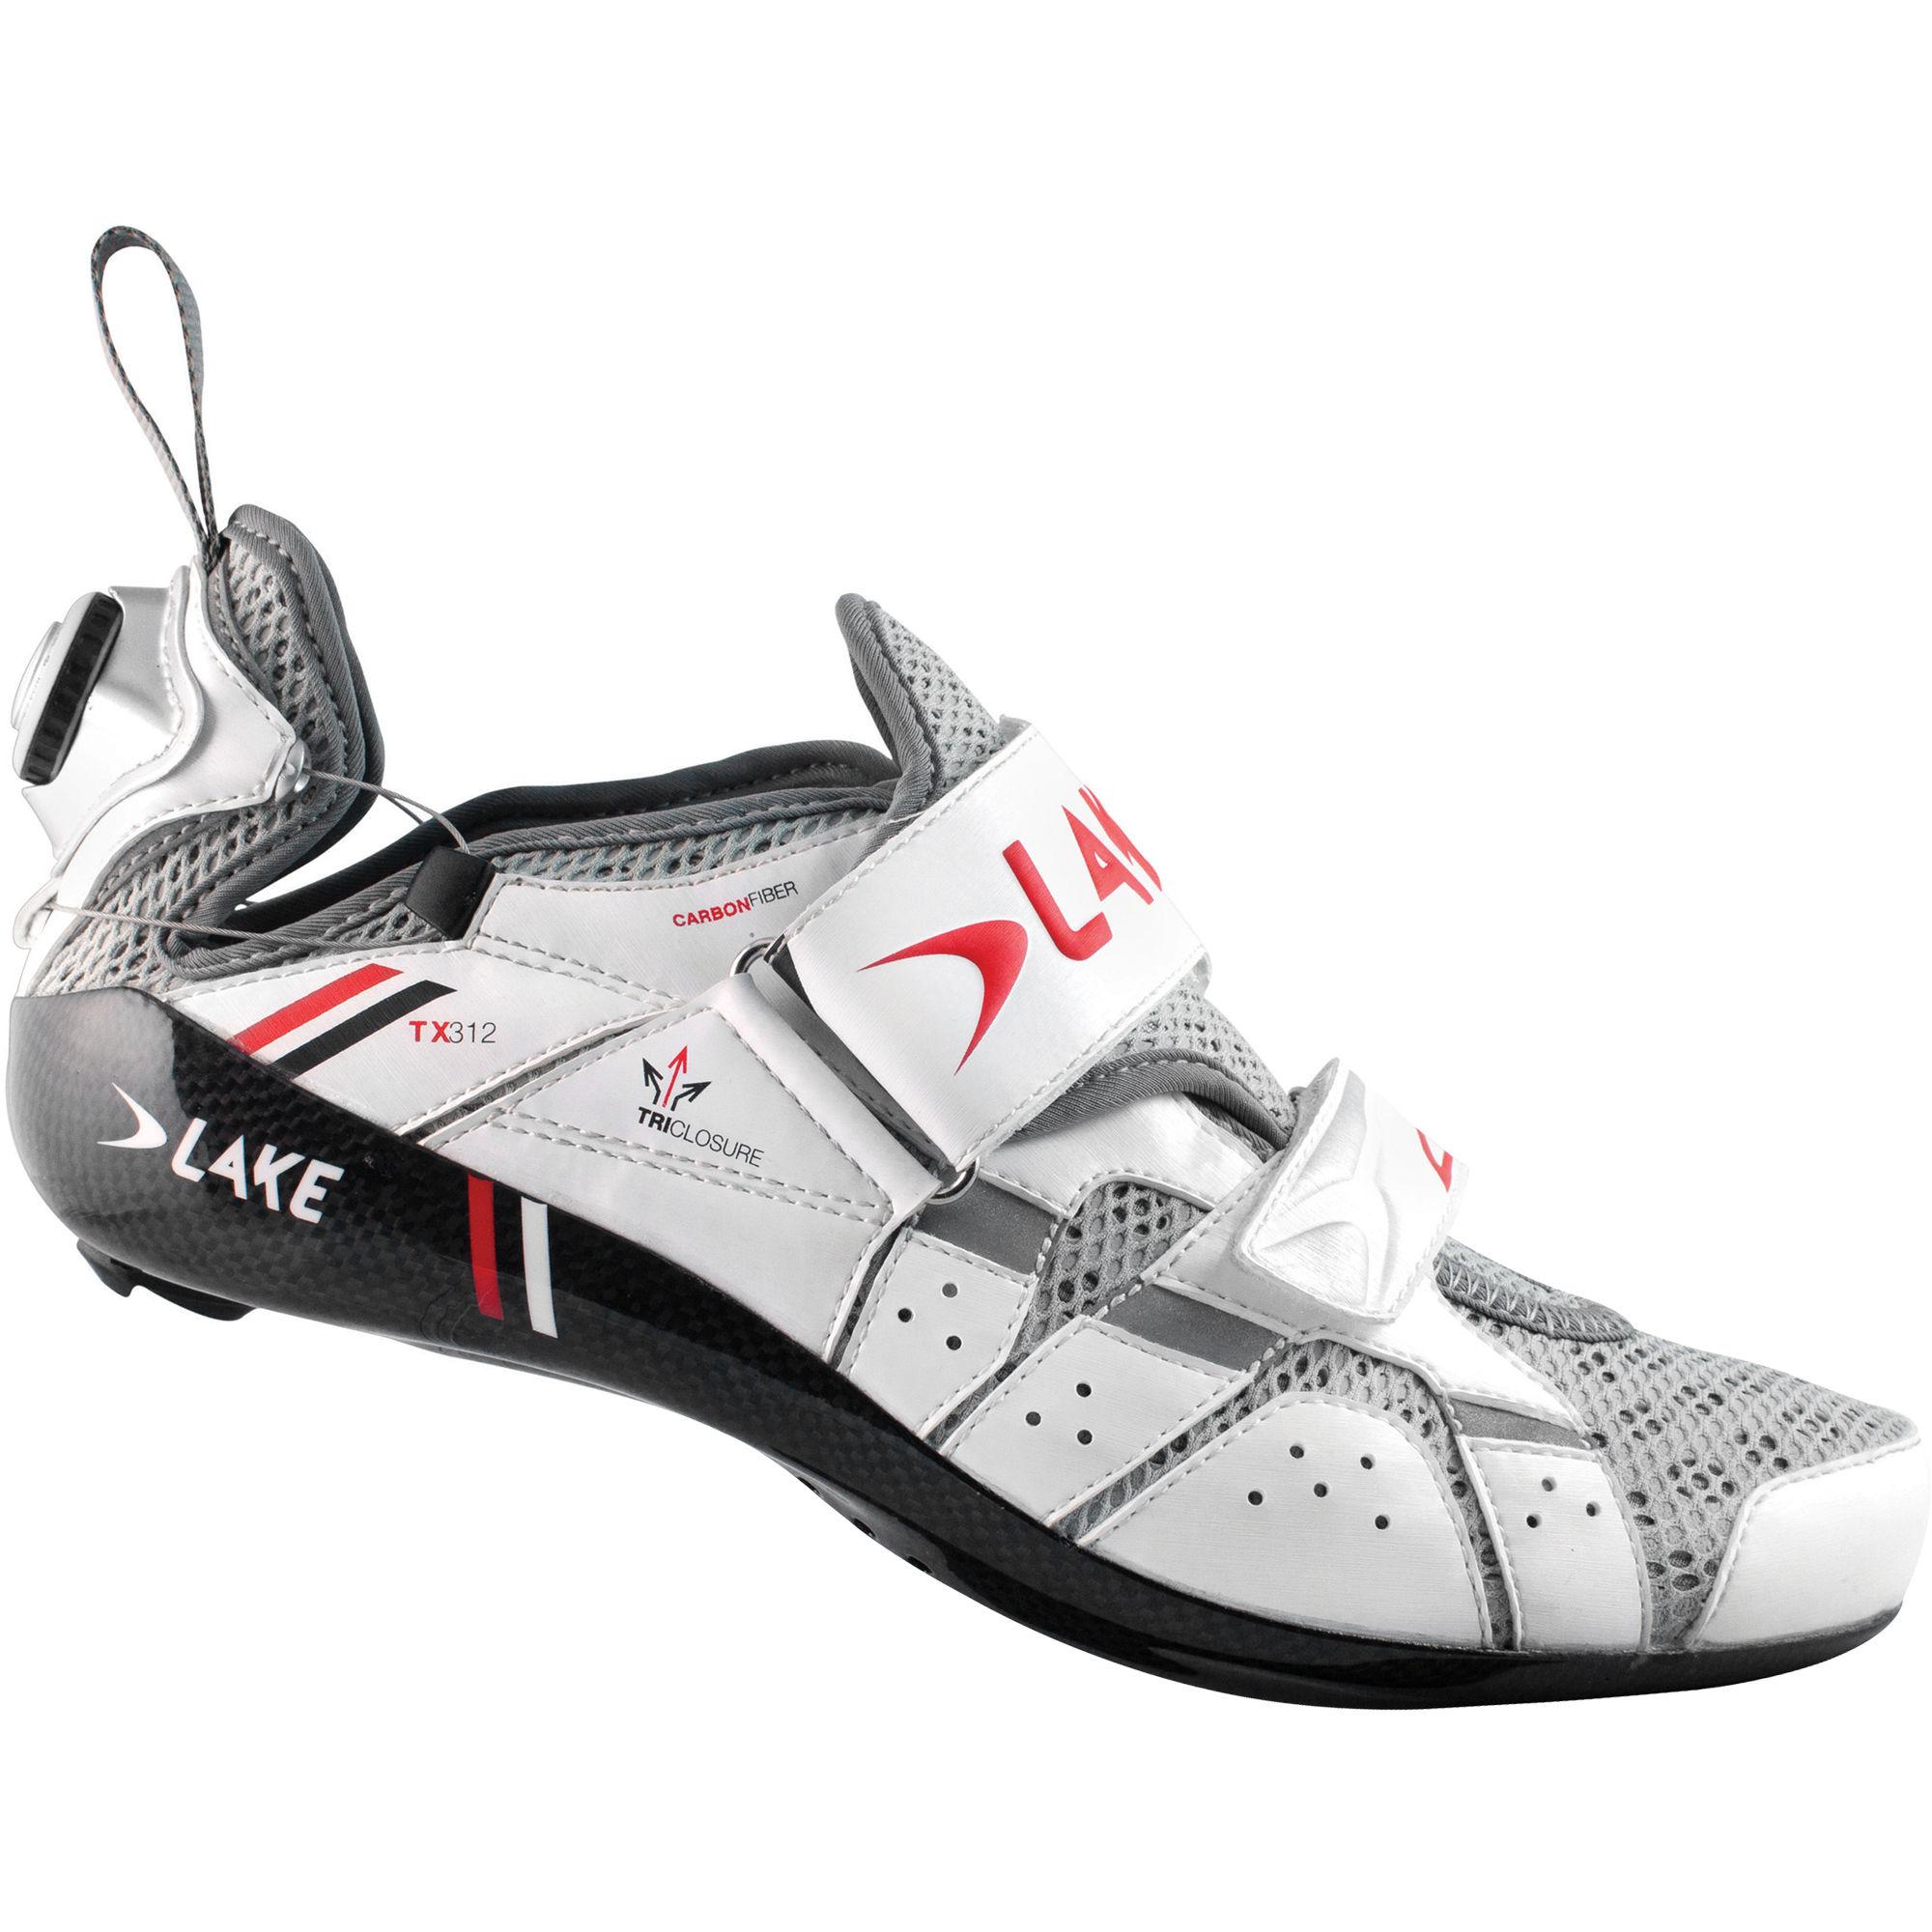 Foto Zapatillas de triatlón para mujer Lake - TX312C - 39 White